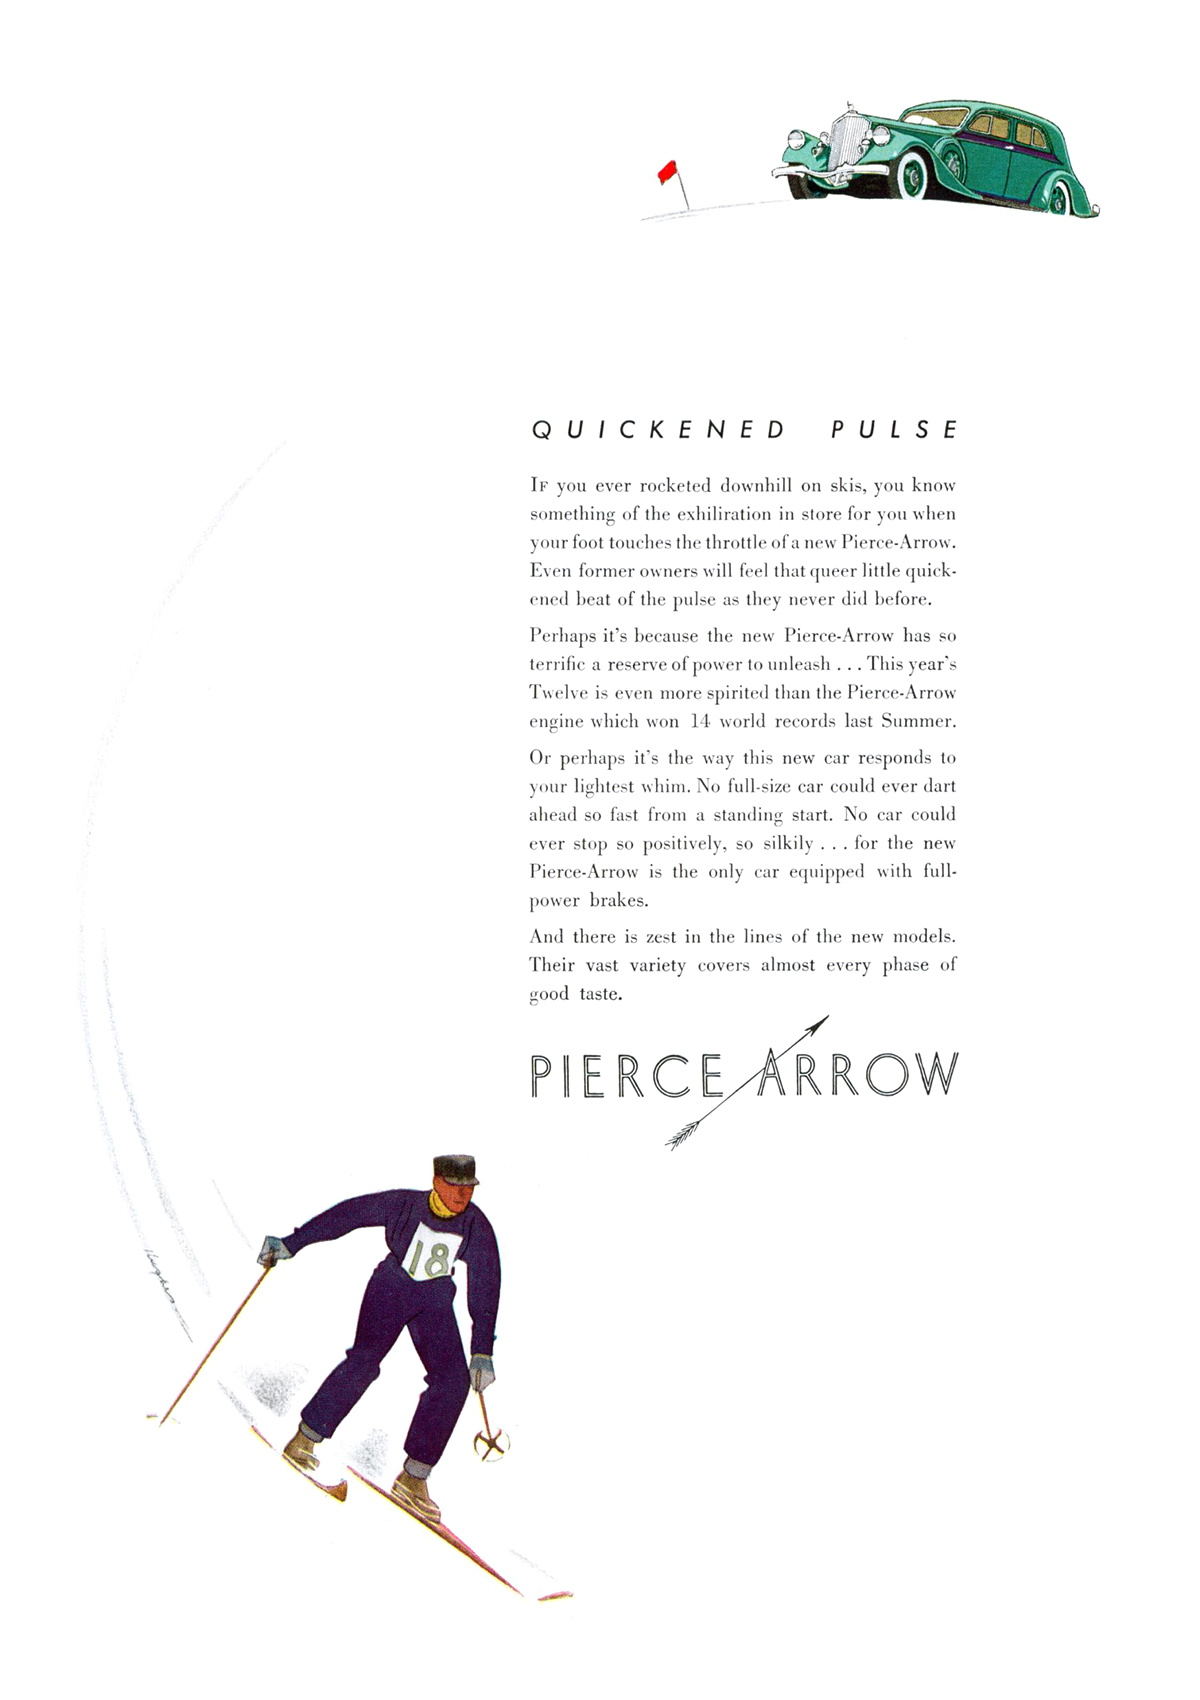 Pierce-Arrow Ad (1934) – Quickened Pulse